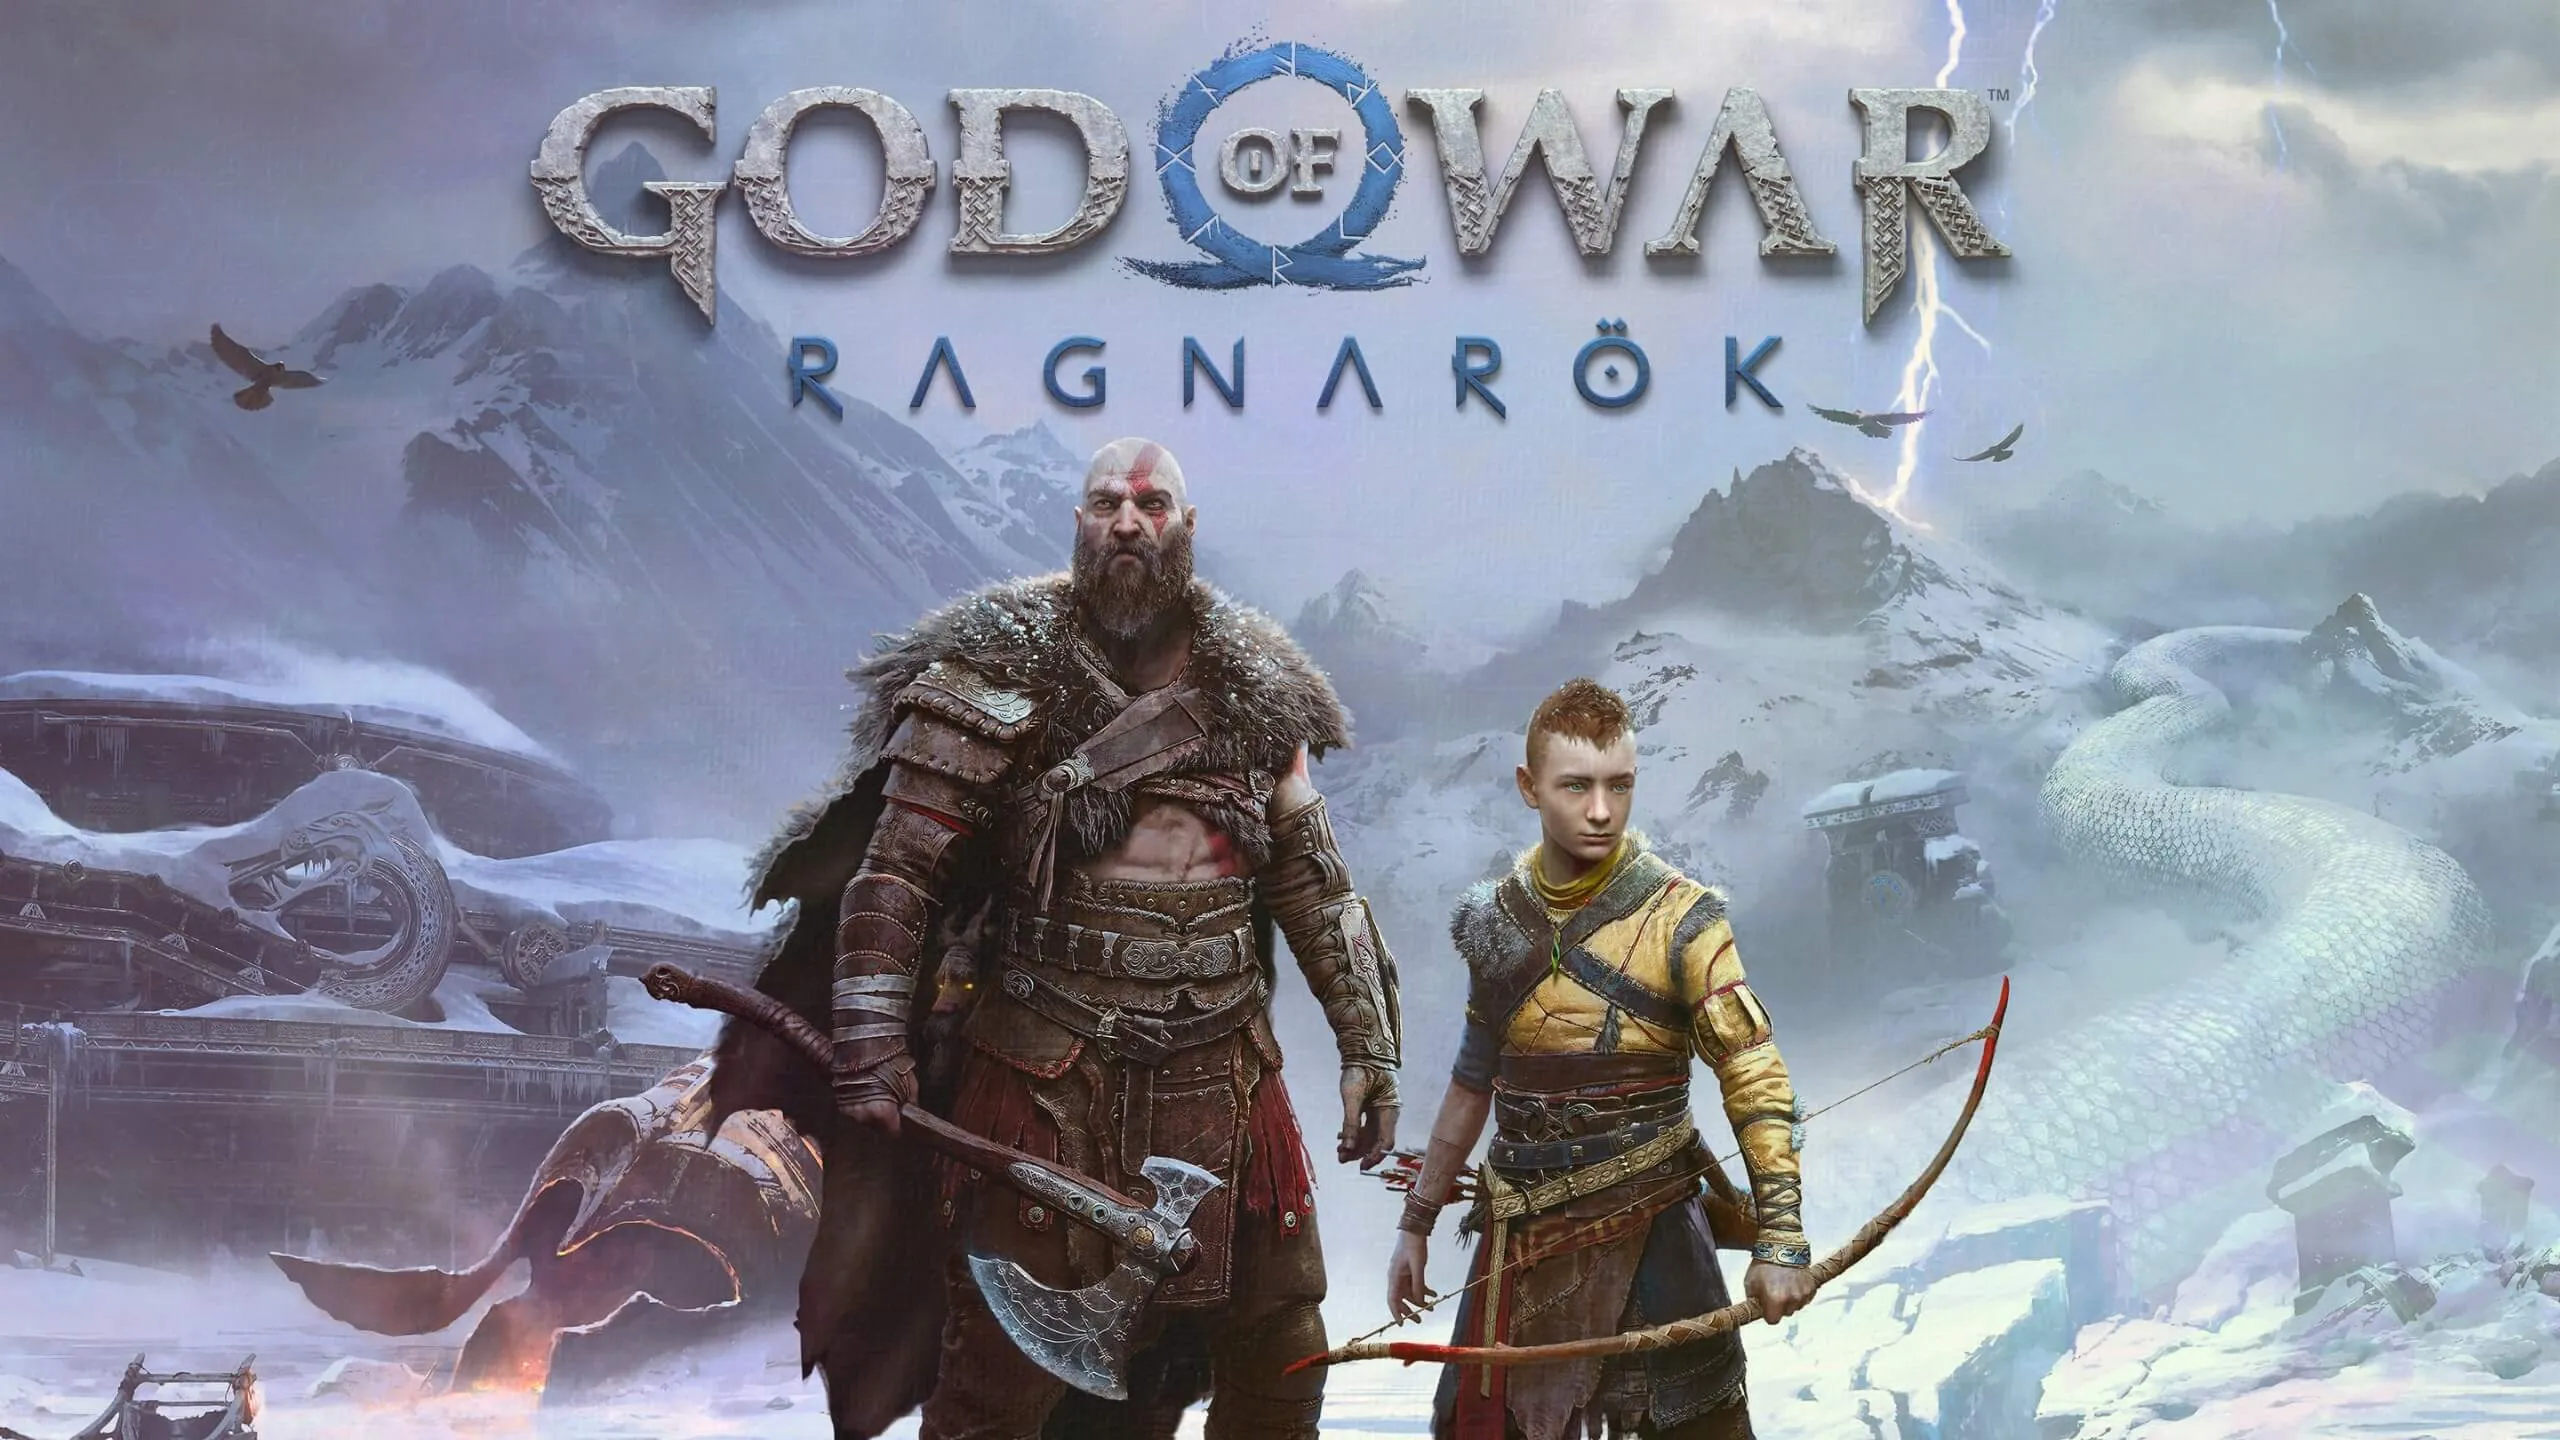 GOW:Ragnarok key art